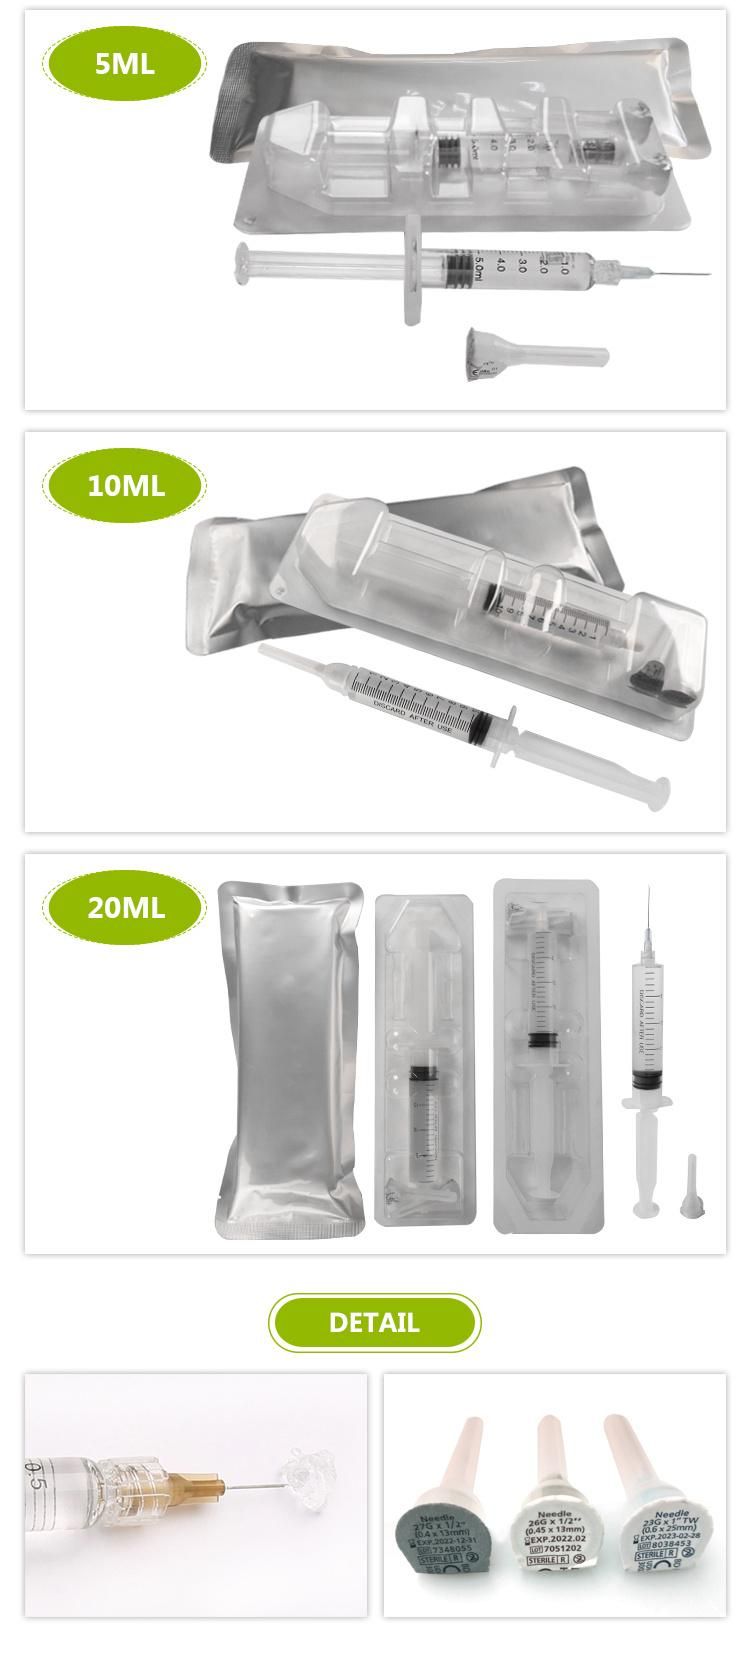 2ml Dermal Filler Injectable Hyaluronic Acid Cheaper Price